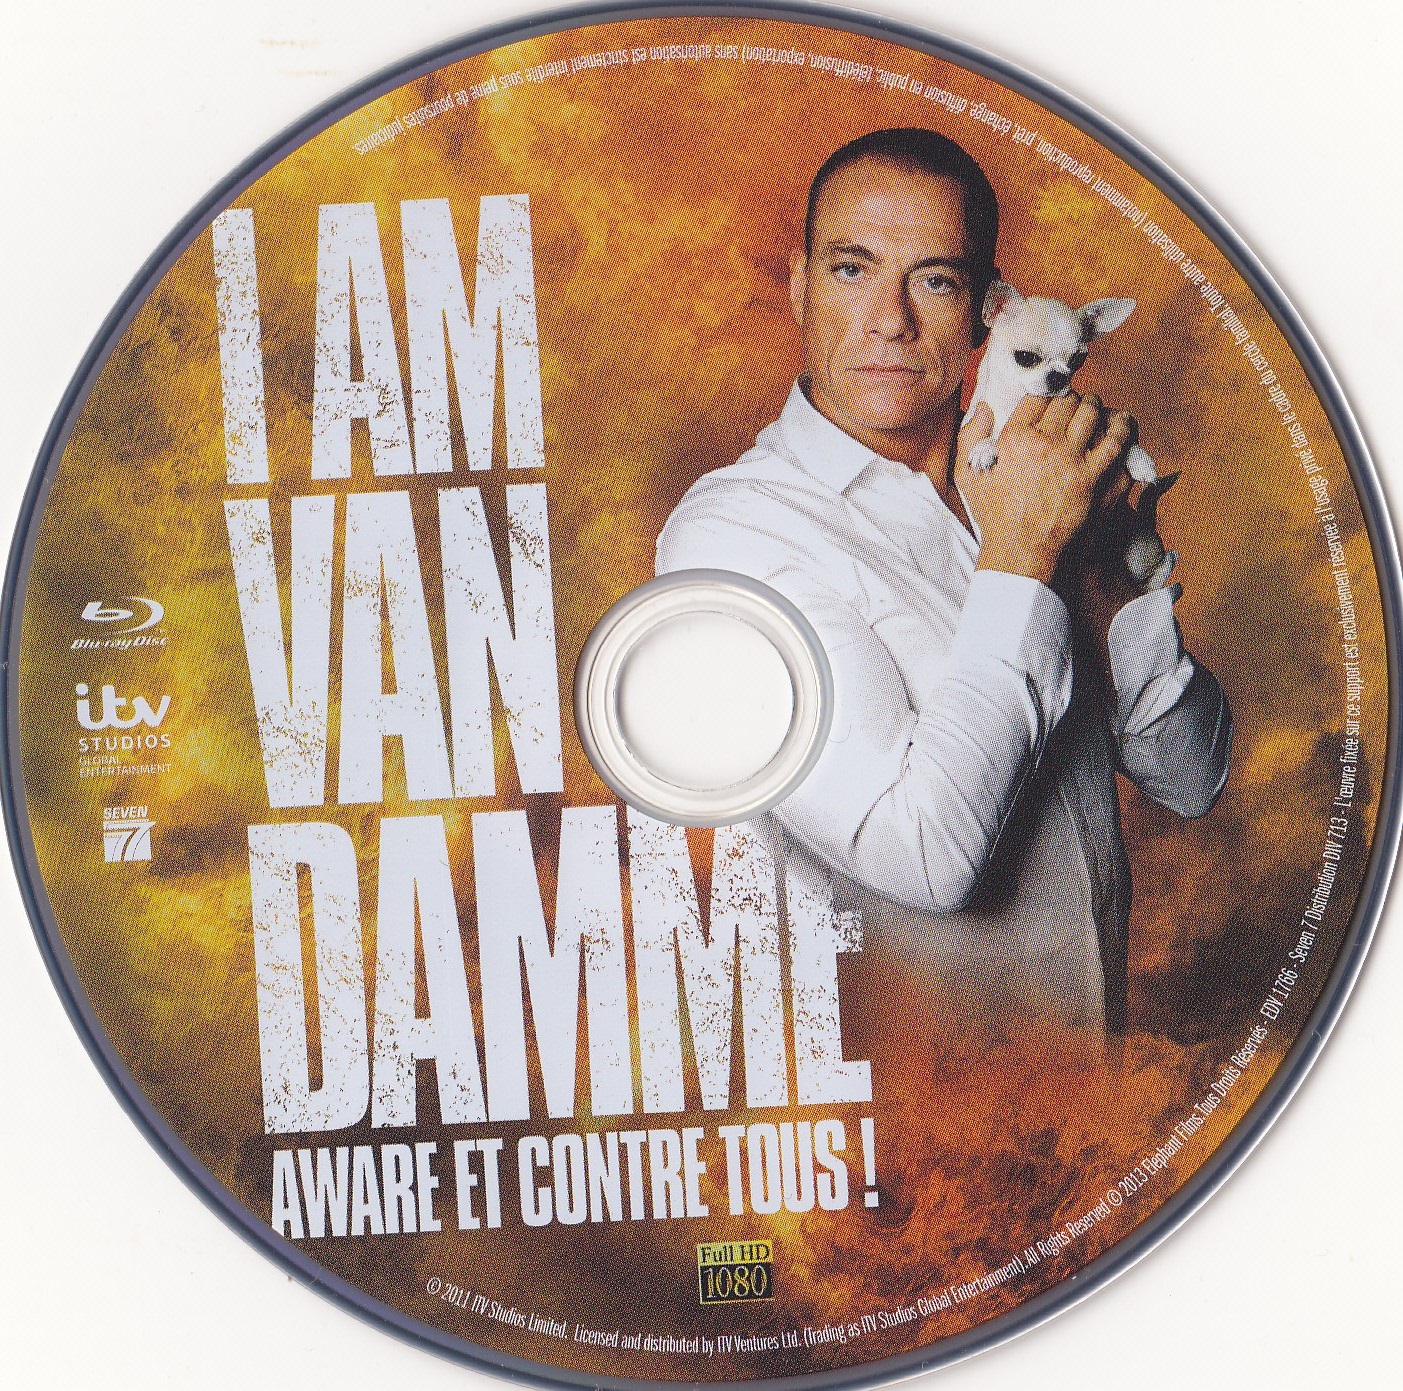 I am Van Damme Aware et contre tous (BLU-RAY)